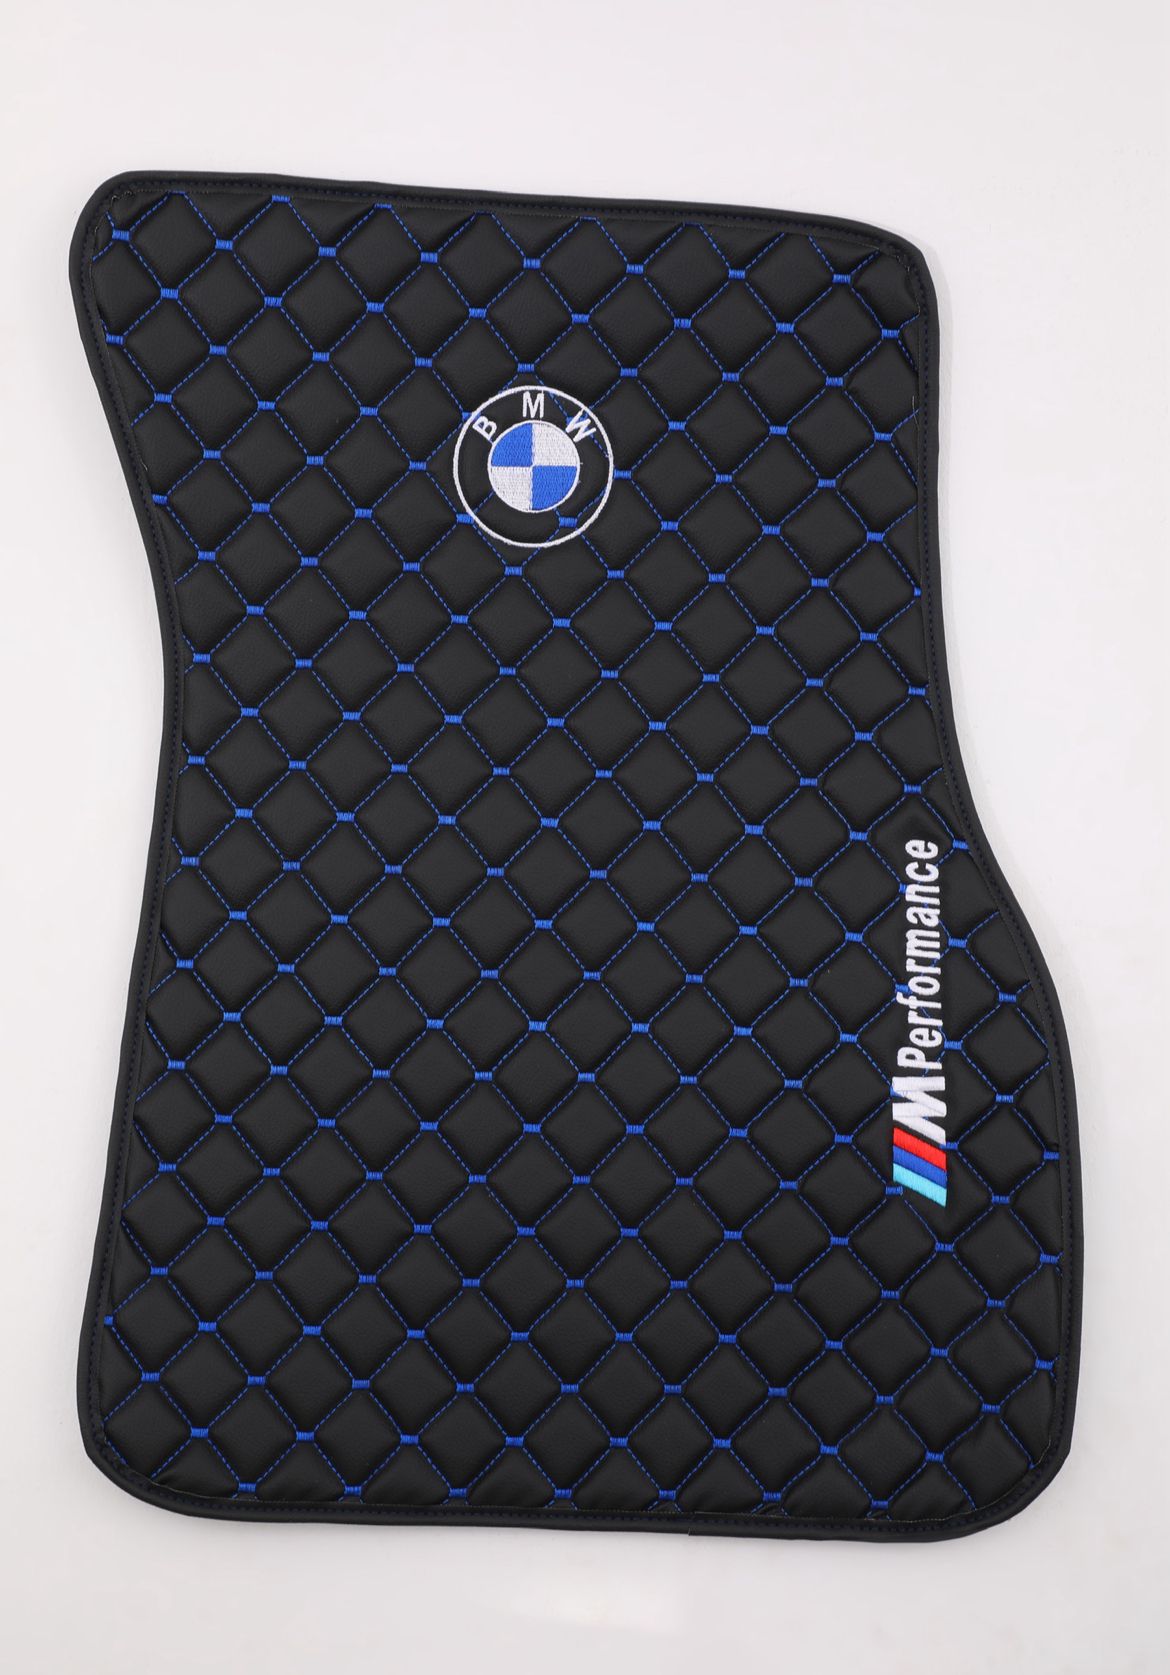 For all BMW F34 M Performance Luxury Leather Custom Car Mat 4x